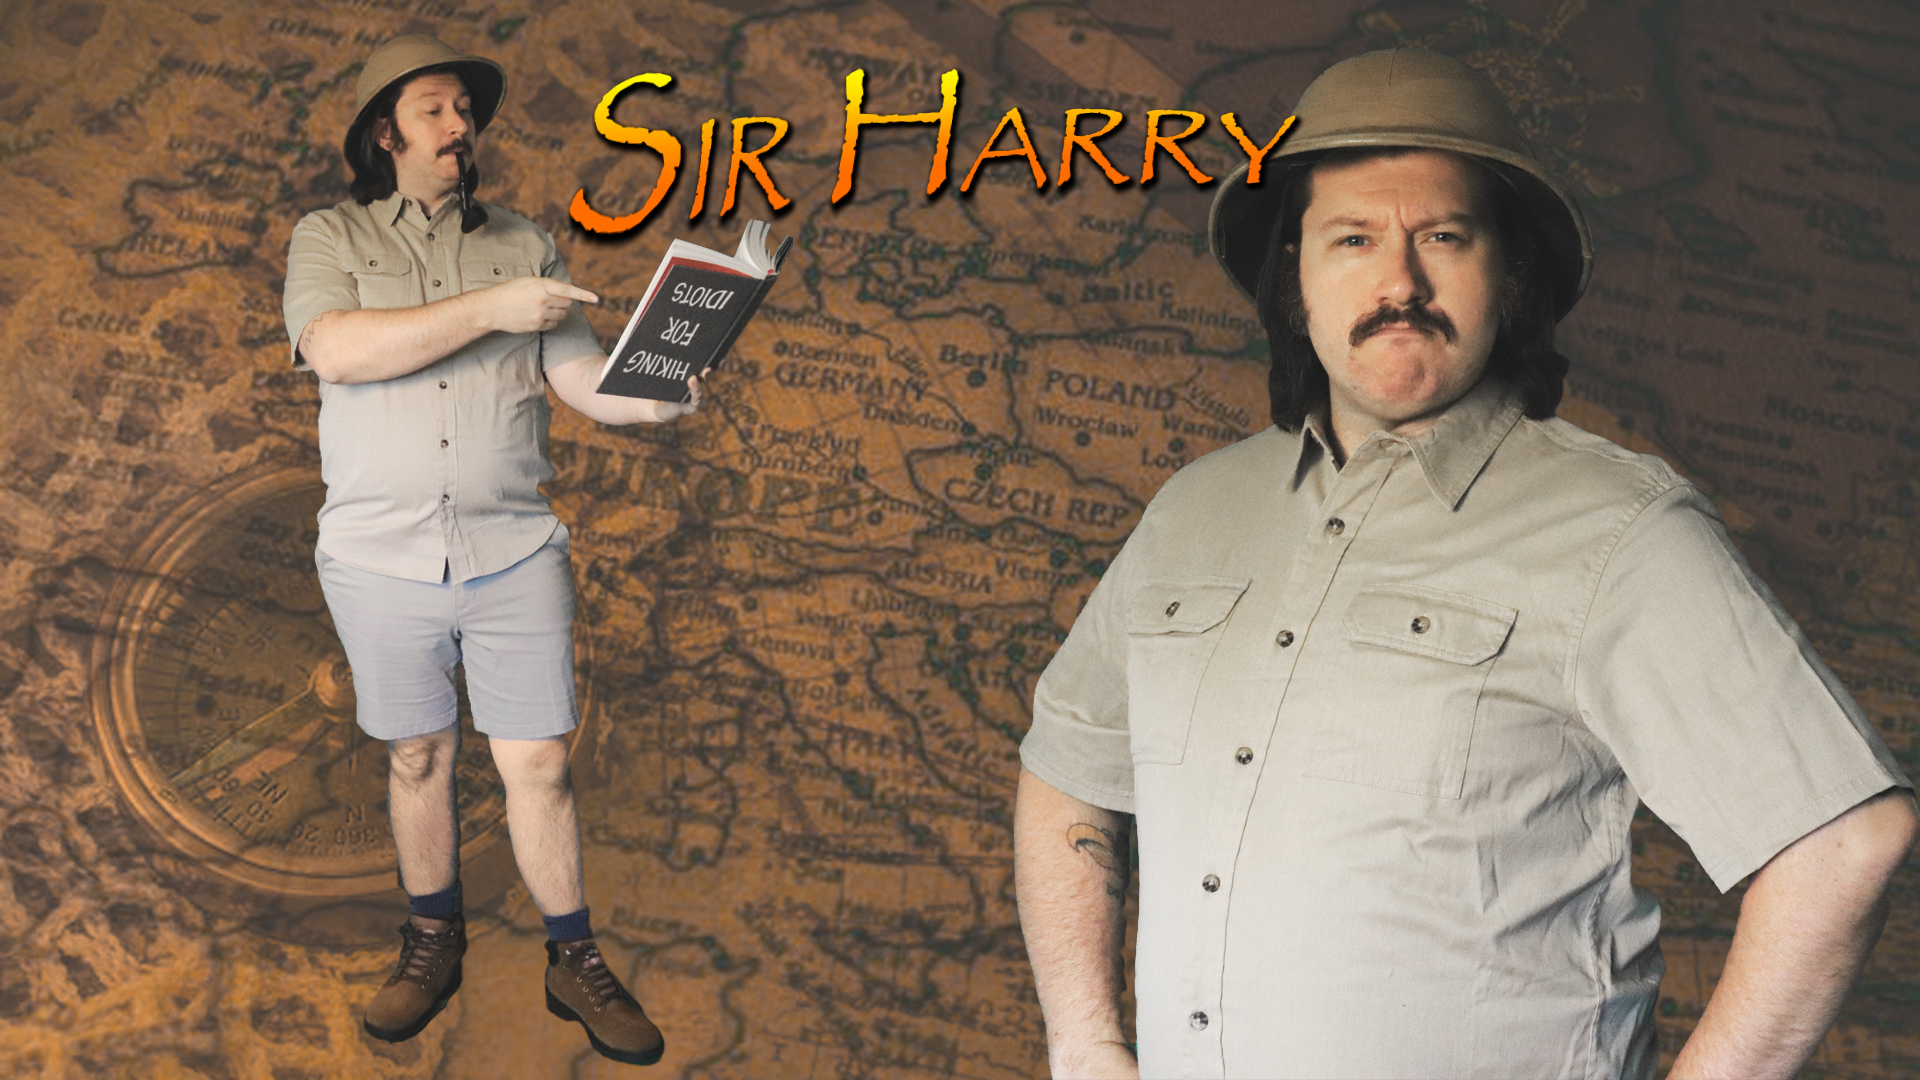 Evan Oslund as Sir Harry Proctor-Gamble-Smythe